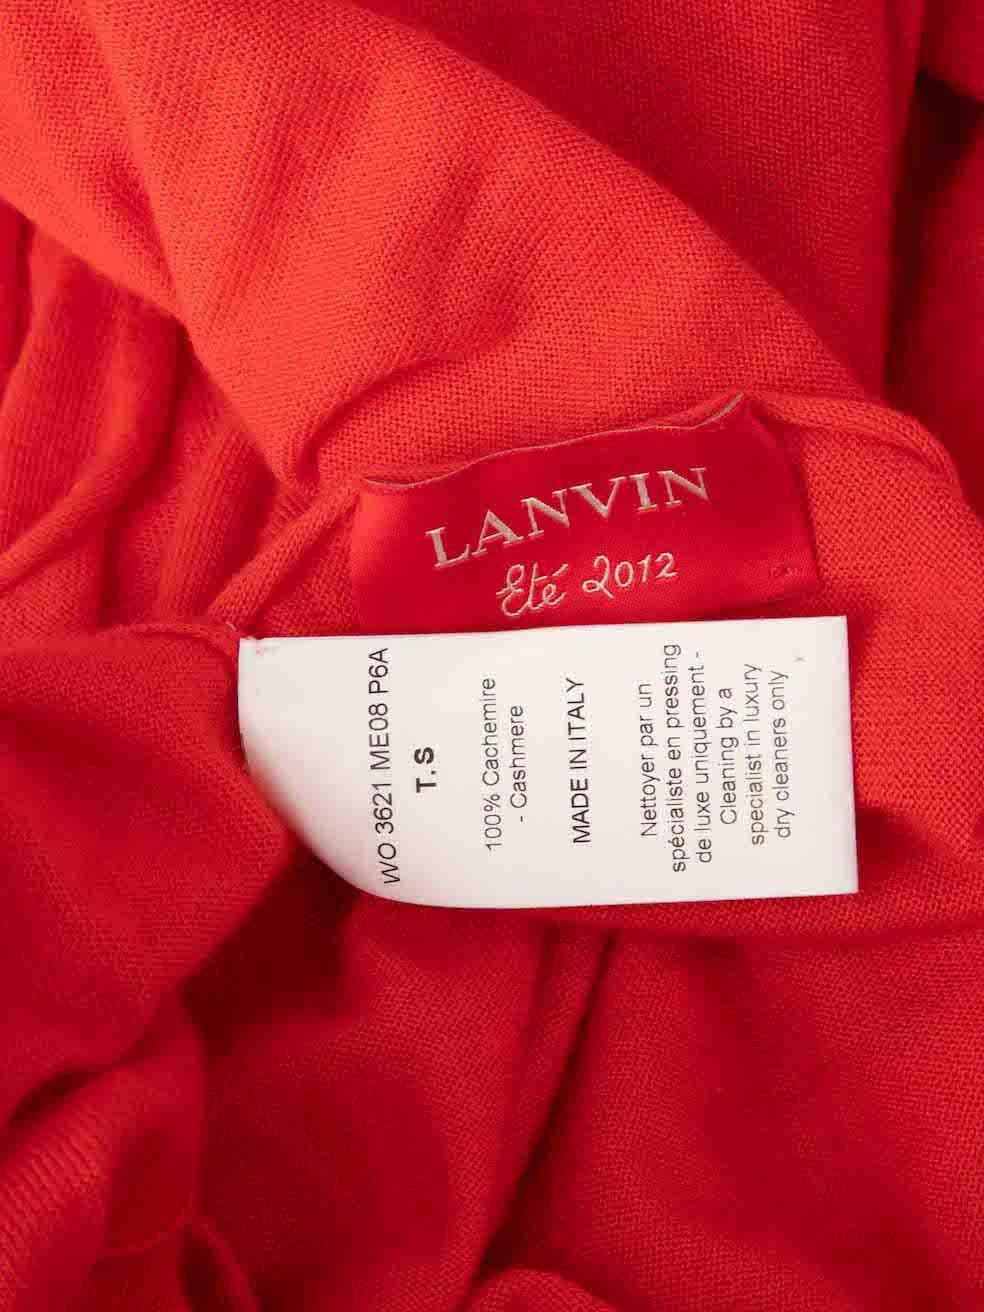 Lanvin Red Cashmere Fine Knit Draped Shoulder Top Size S For Sale 1